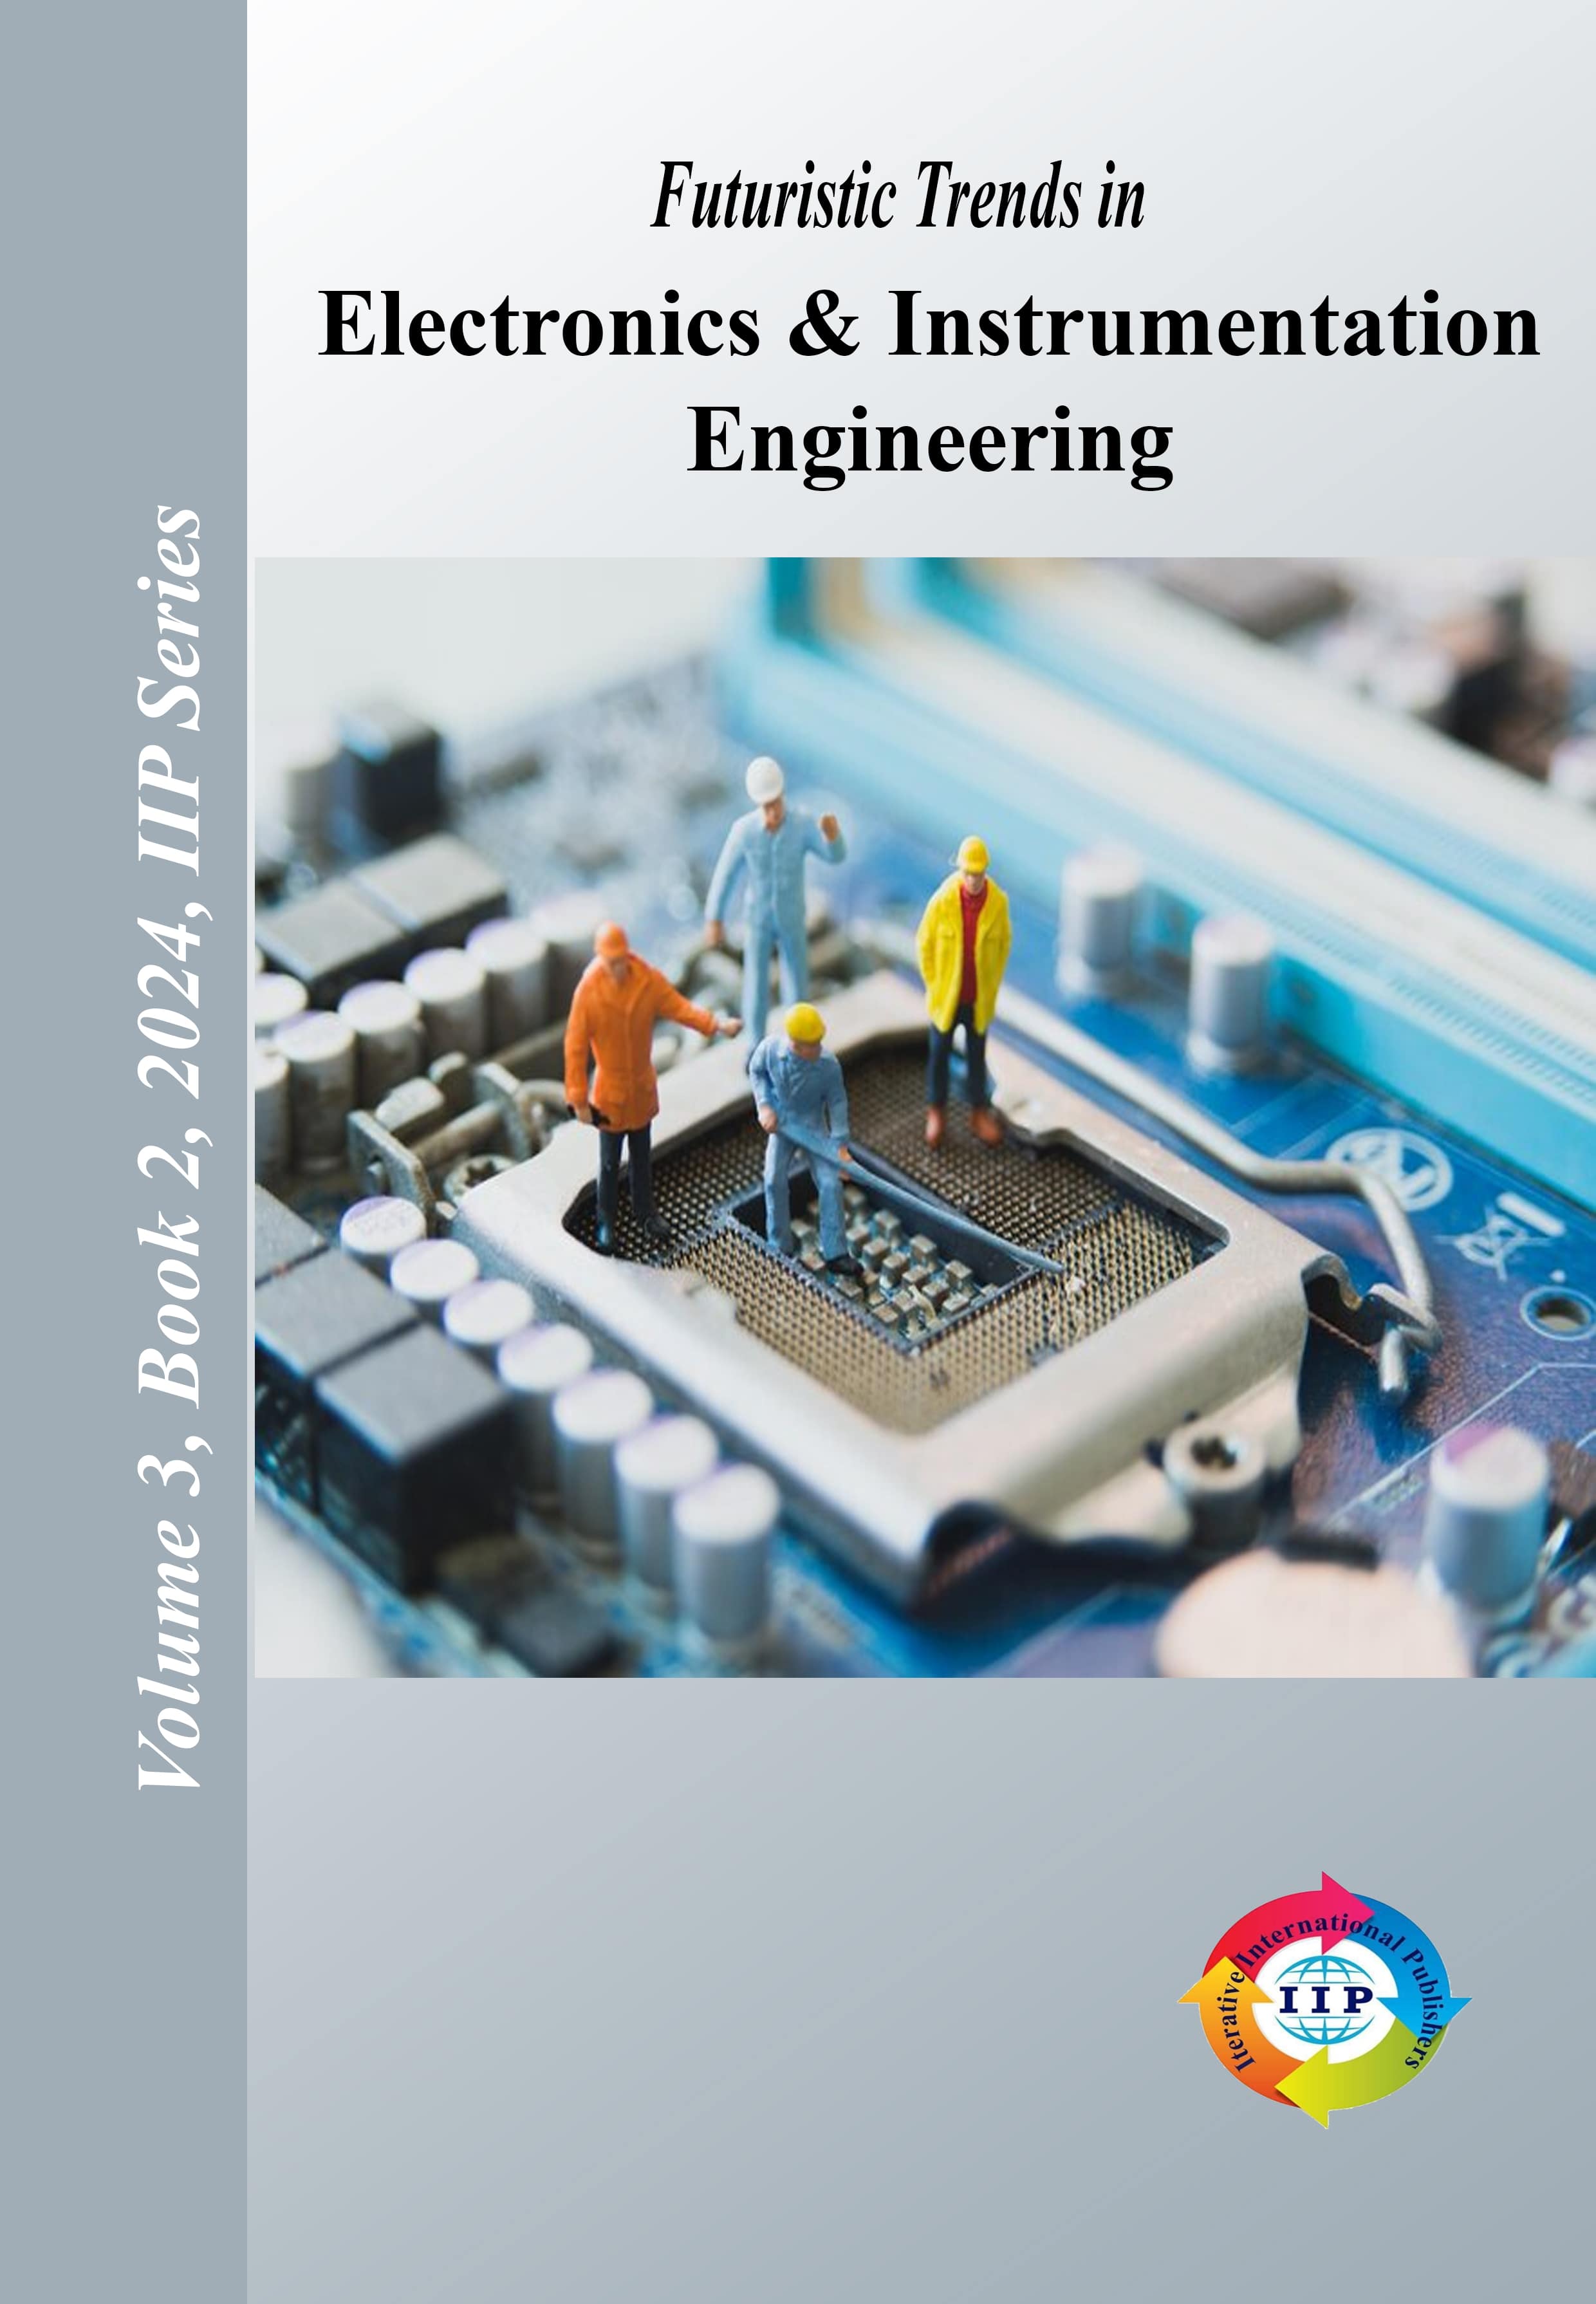 Futuristic Trends in Electronics & Instrumentation Engineering Volume 3 Book 2